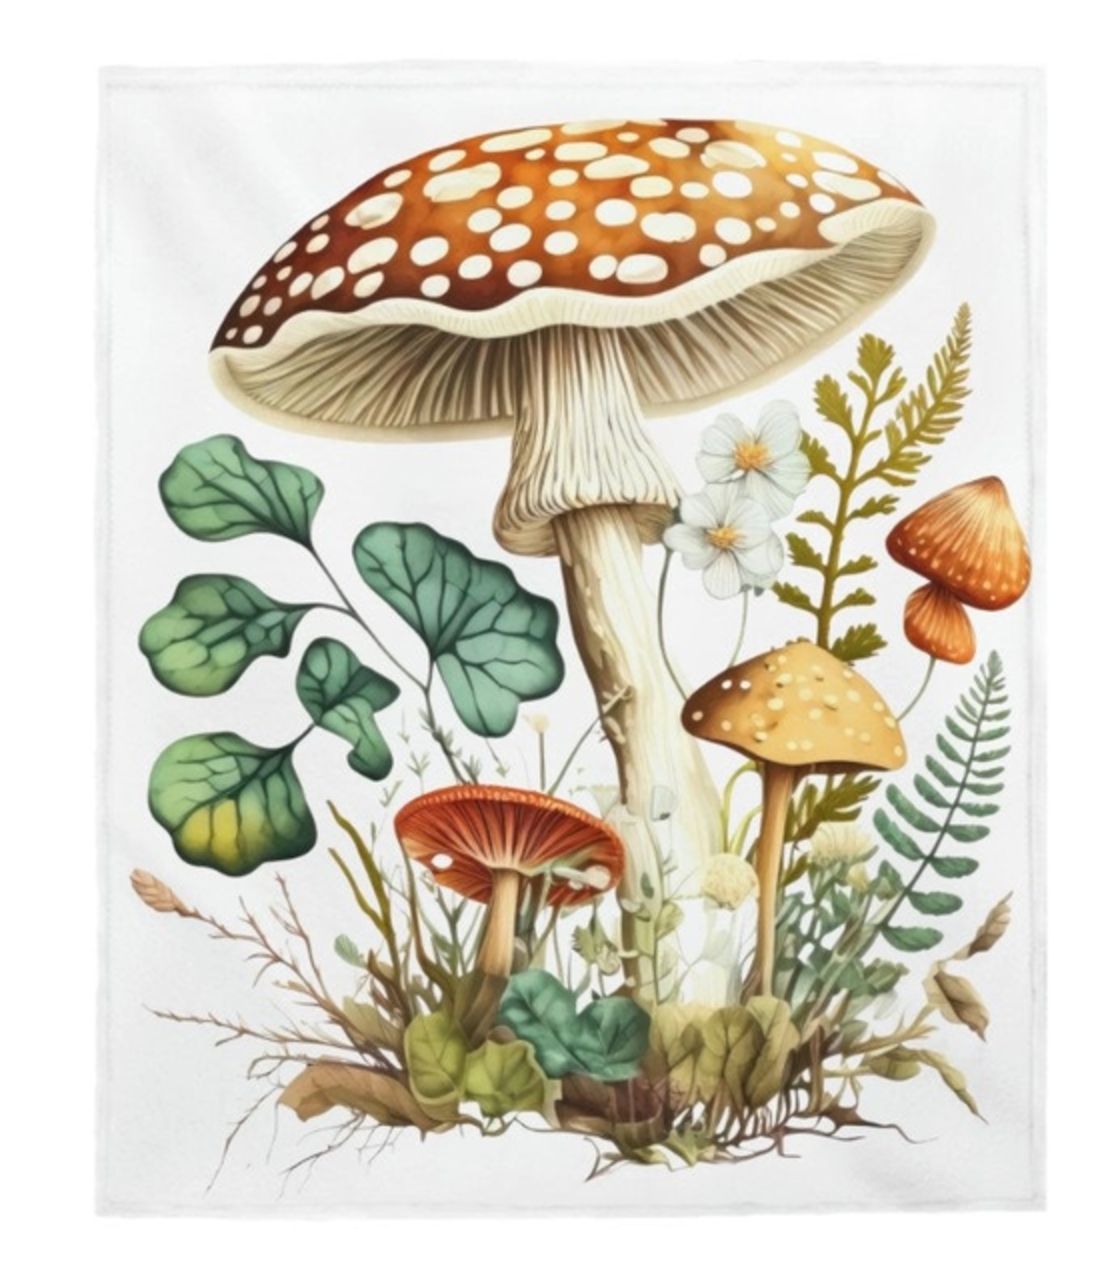 Mushroom Cozy Home Set - Lumbar Pillow, Table Lamp, Plush Blanket - Unique Decor Gift - FungiFly